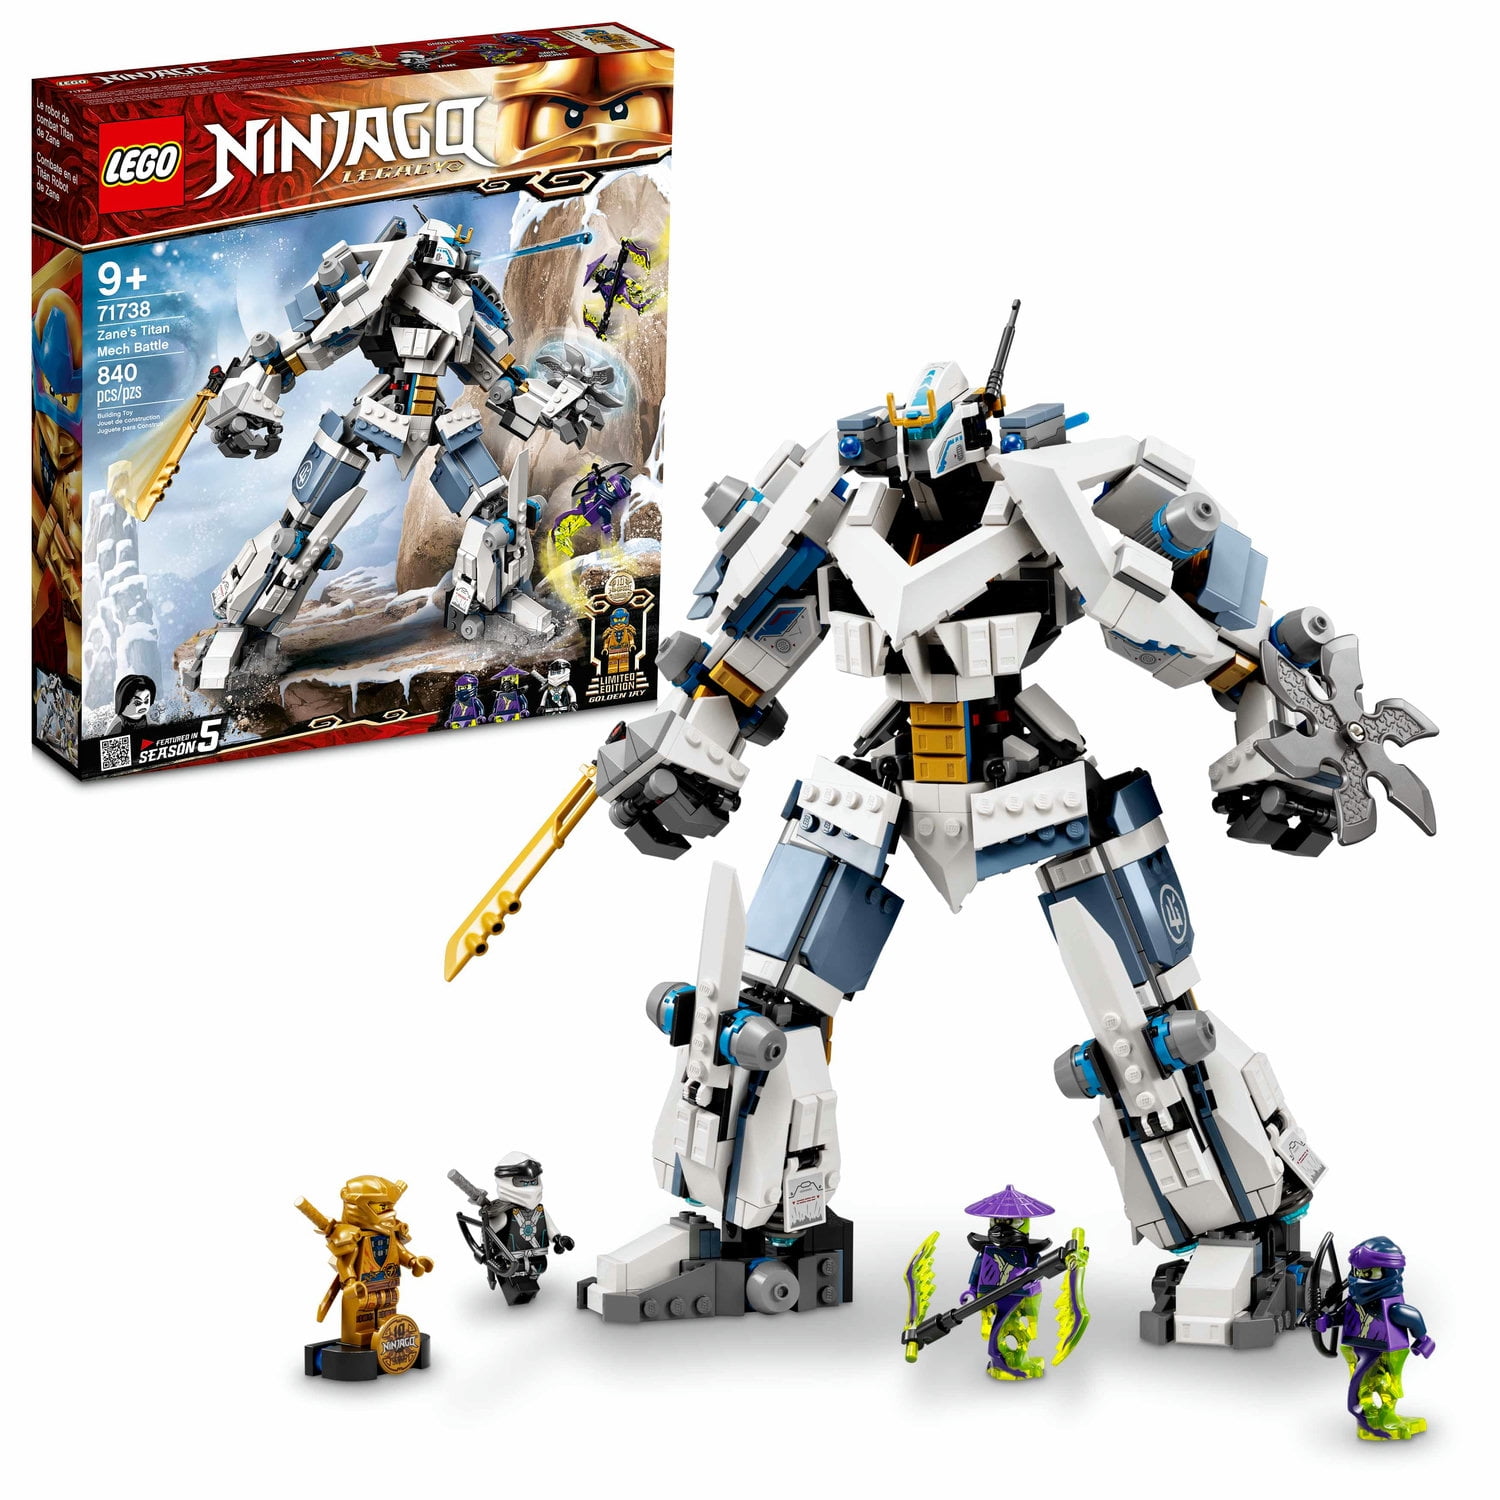 Details about   █ Buy 2 Get 1 Free █ Ninjago Custom MiniFigure Kids Gift Toys 